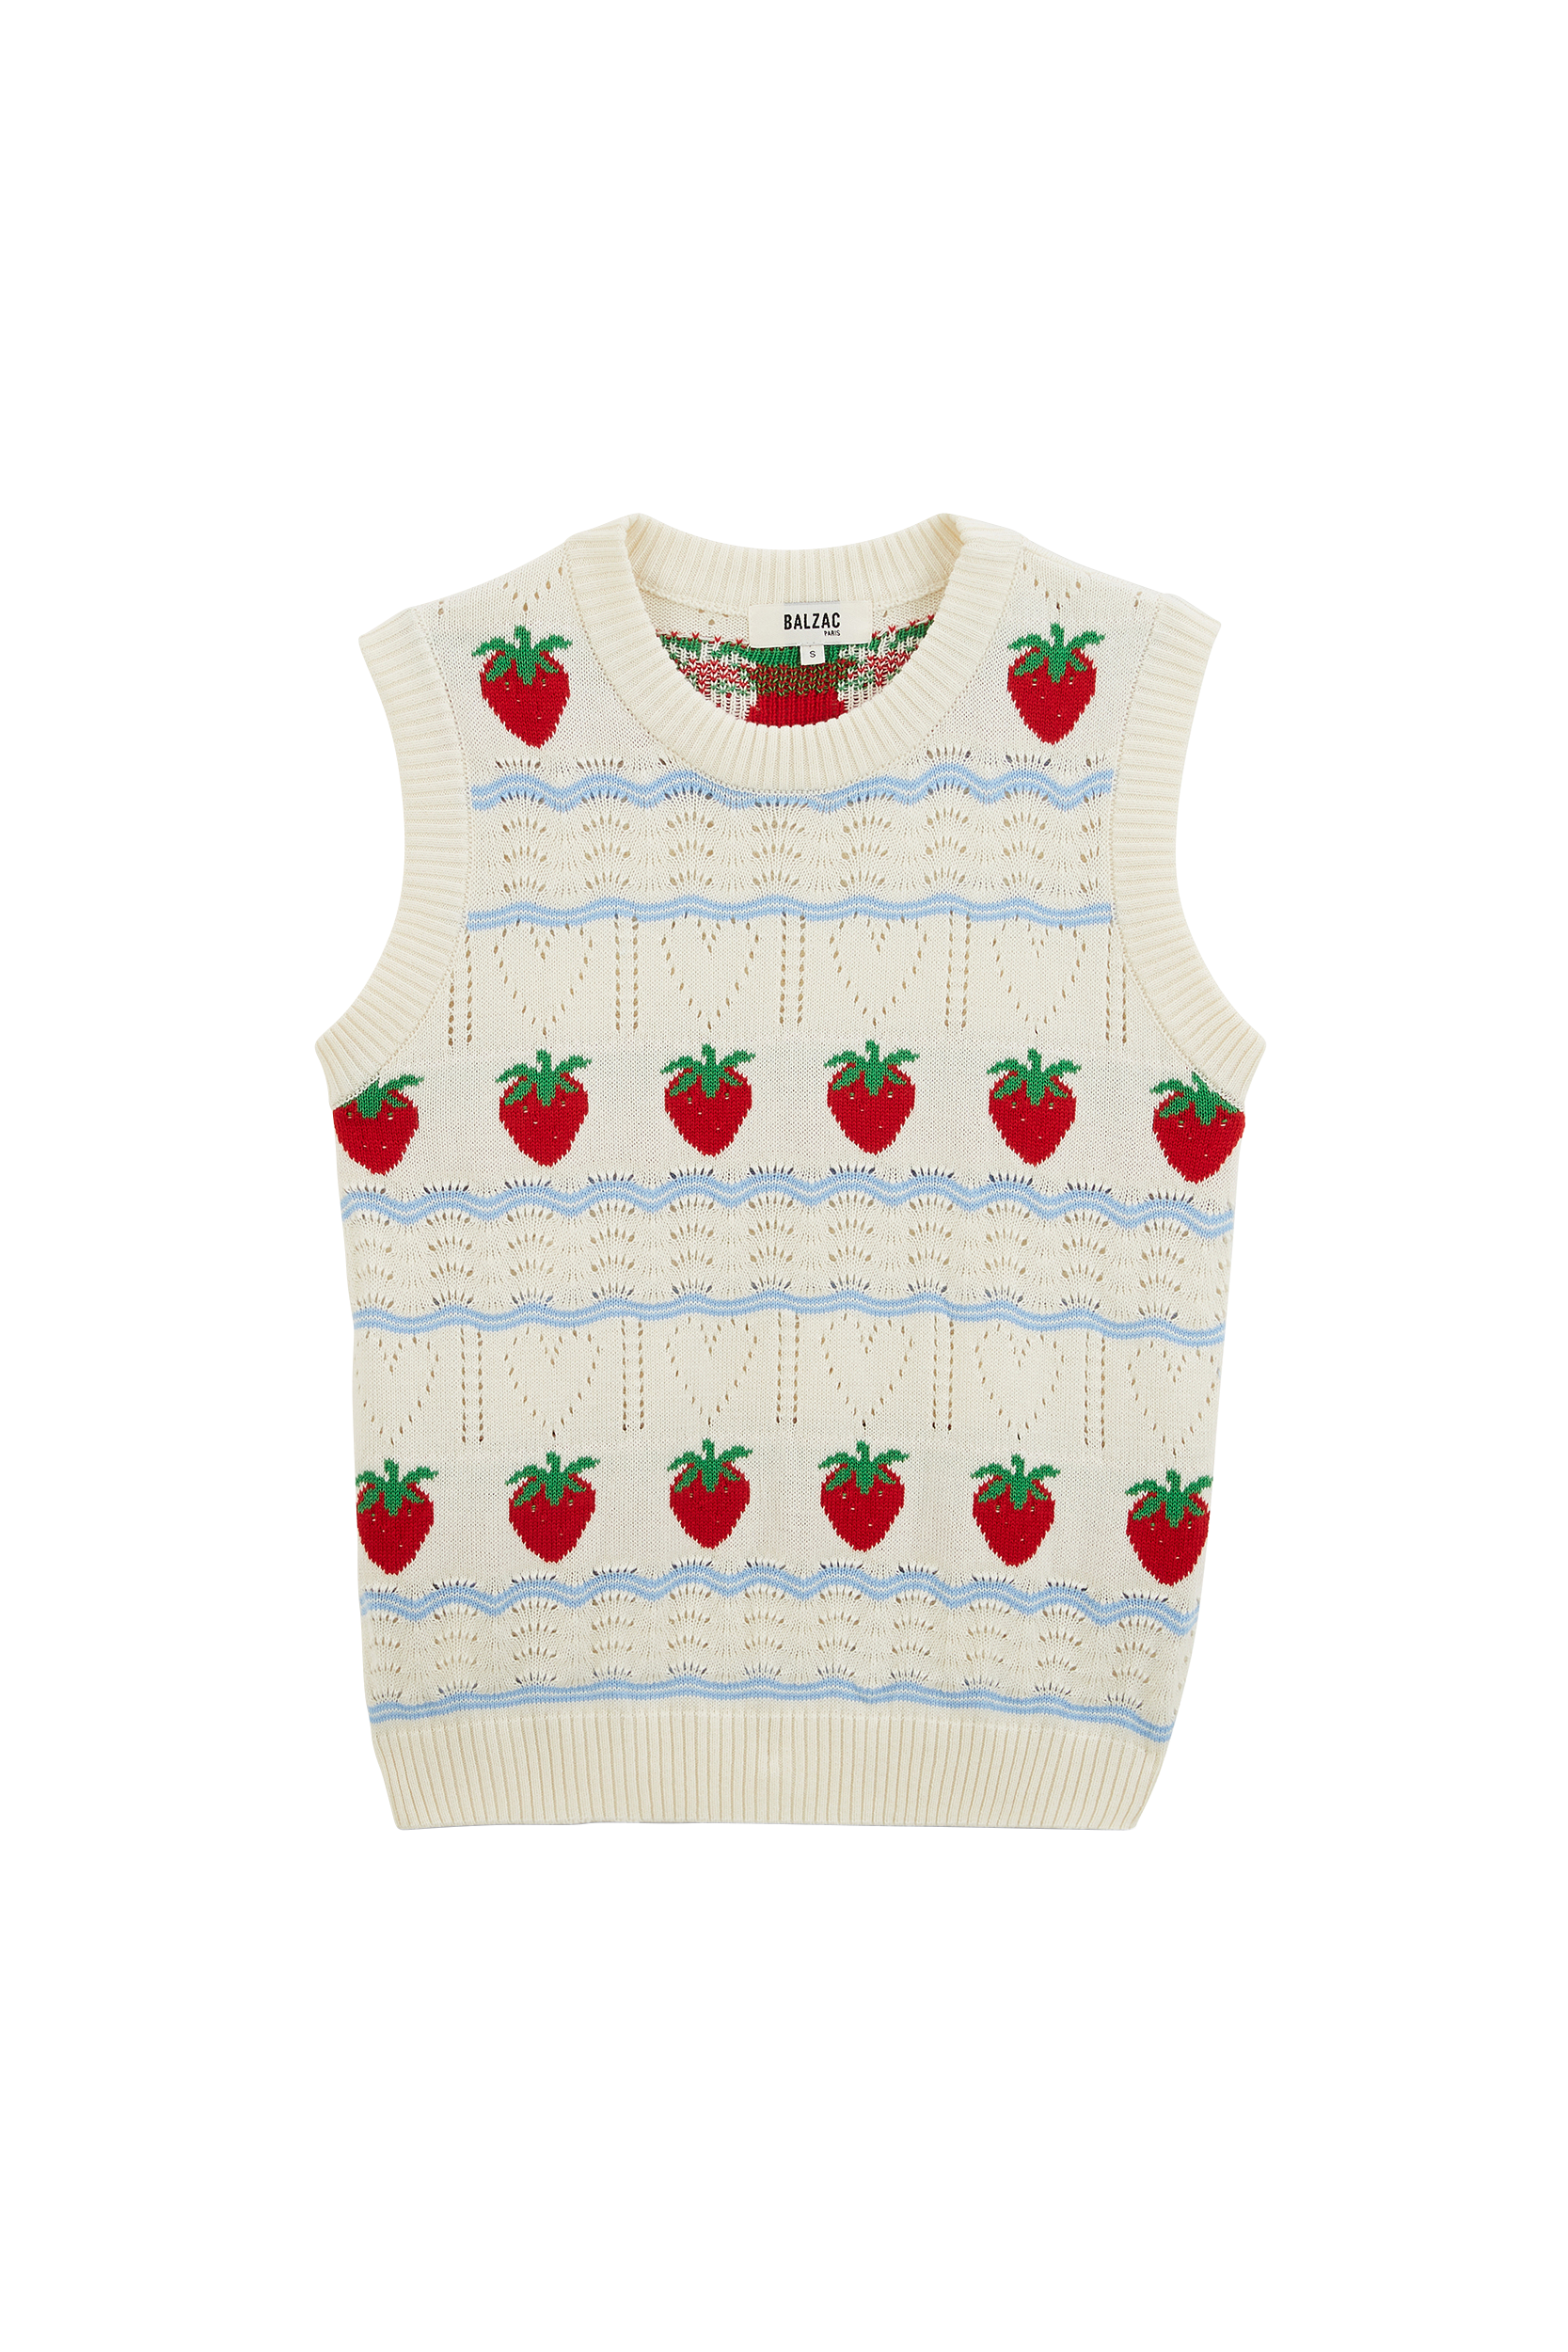 Priska ecru sweater and red strawberries